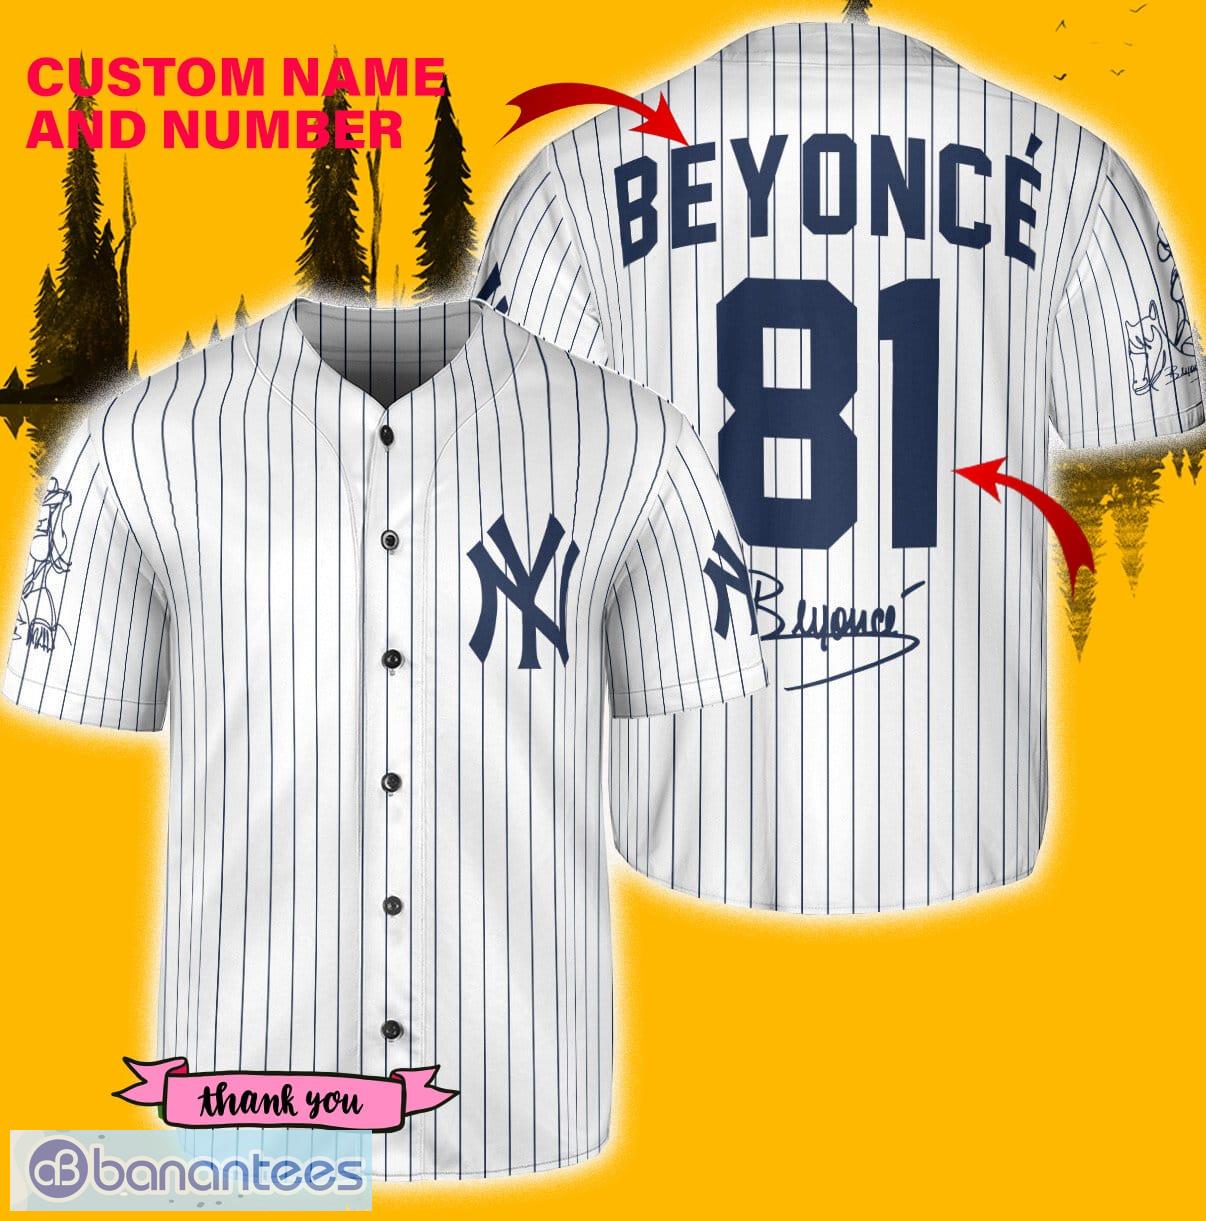 New York Yankees Jerseys, Yankees Baseball Jersey, Uniforms